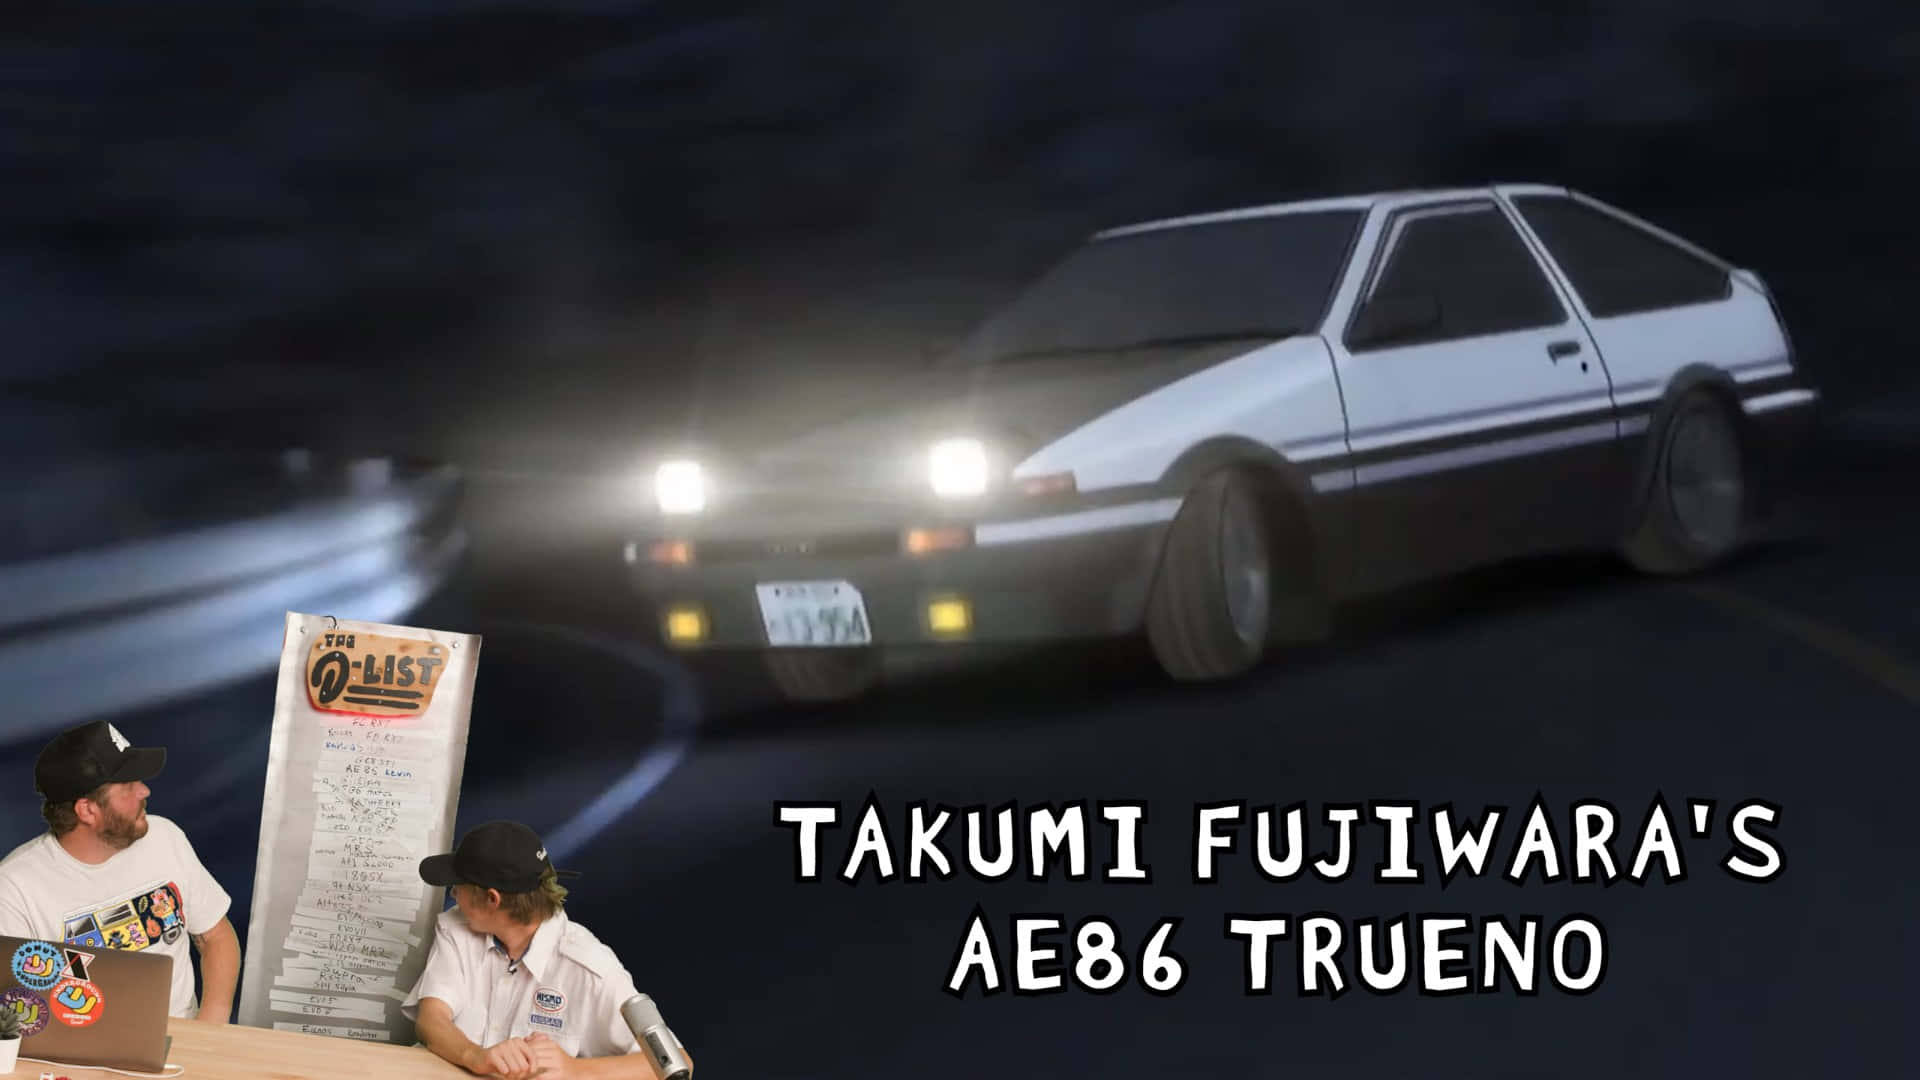 Takumifujiwara No Auge De Sua Carreira Automobilística.